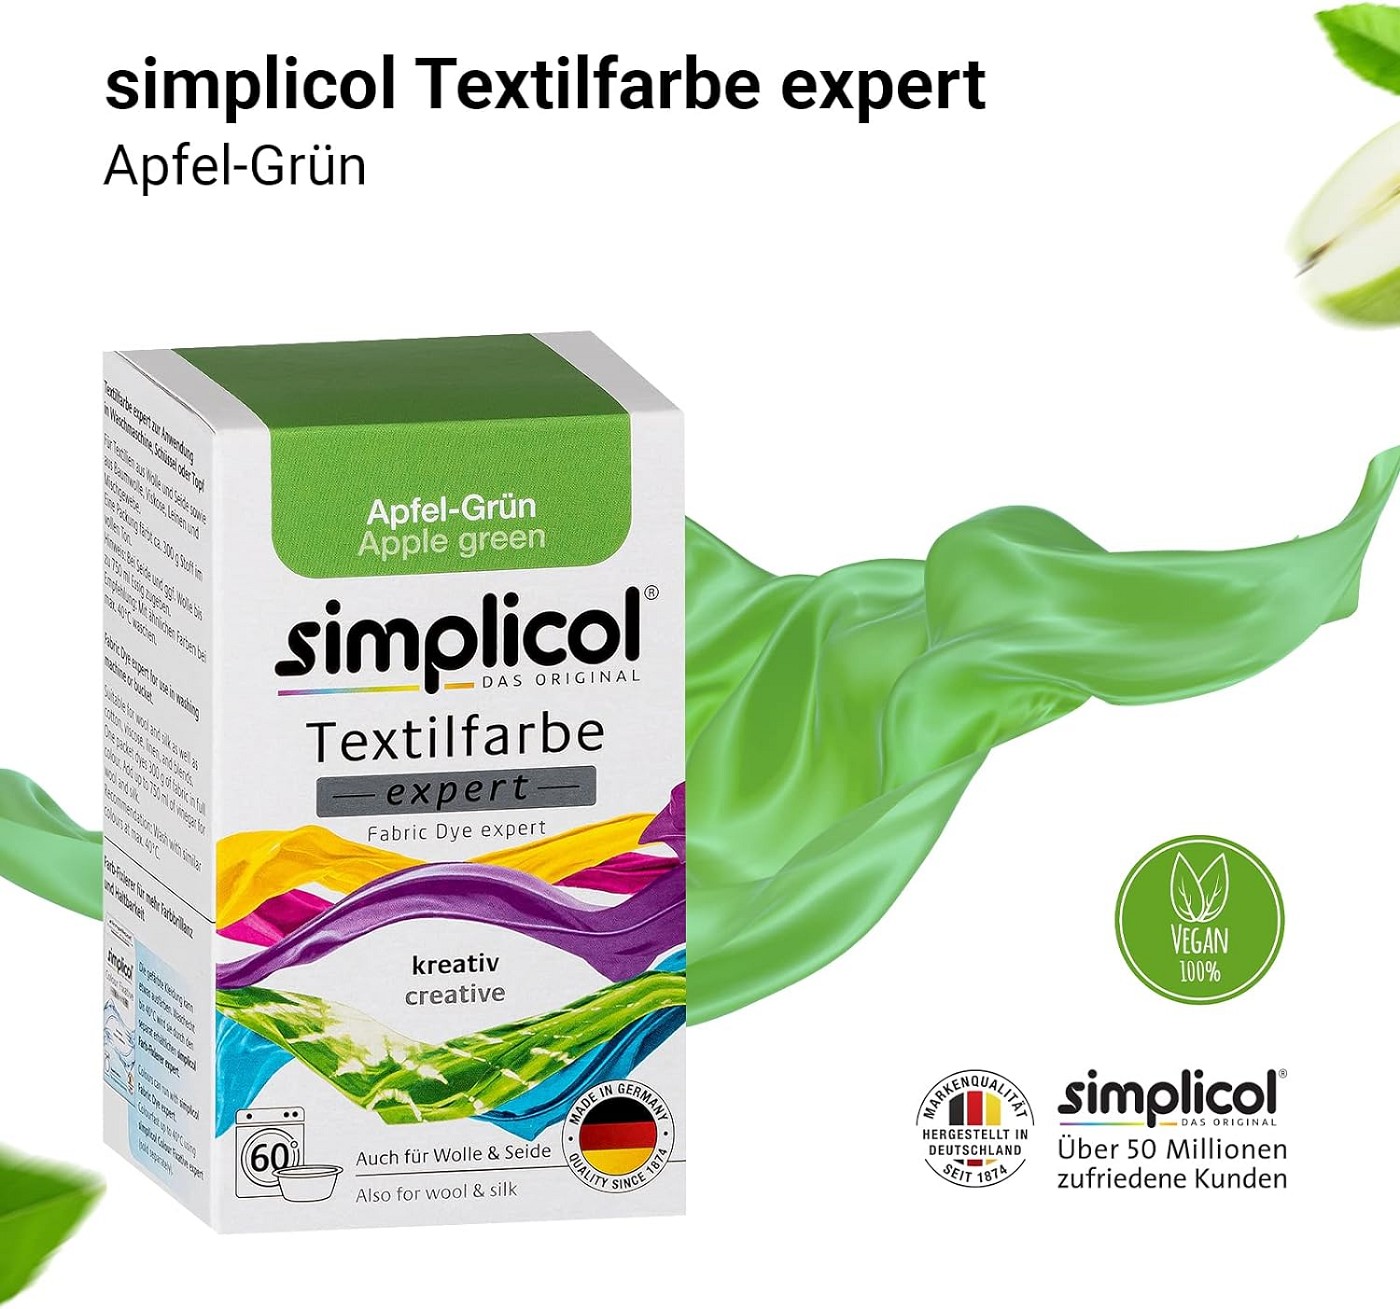 Simplicol Textilfarbe expert Apfel-Grün 300g